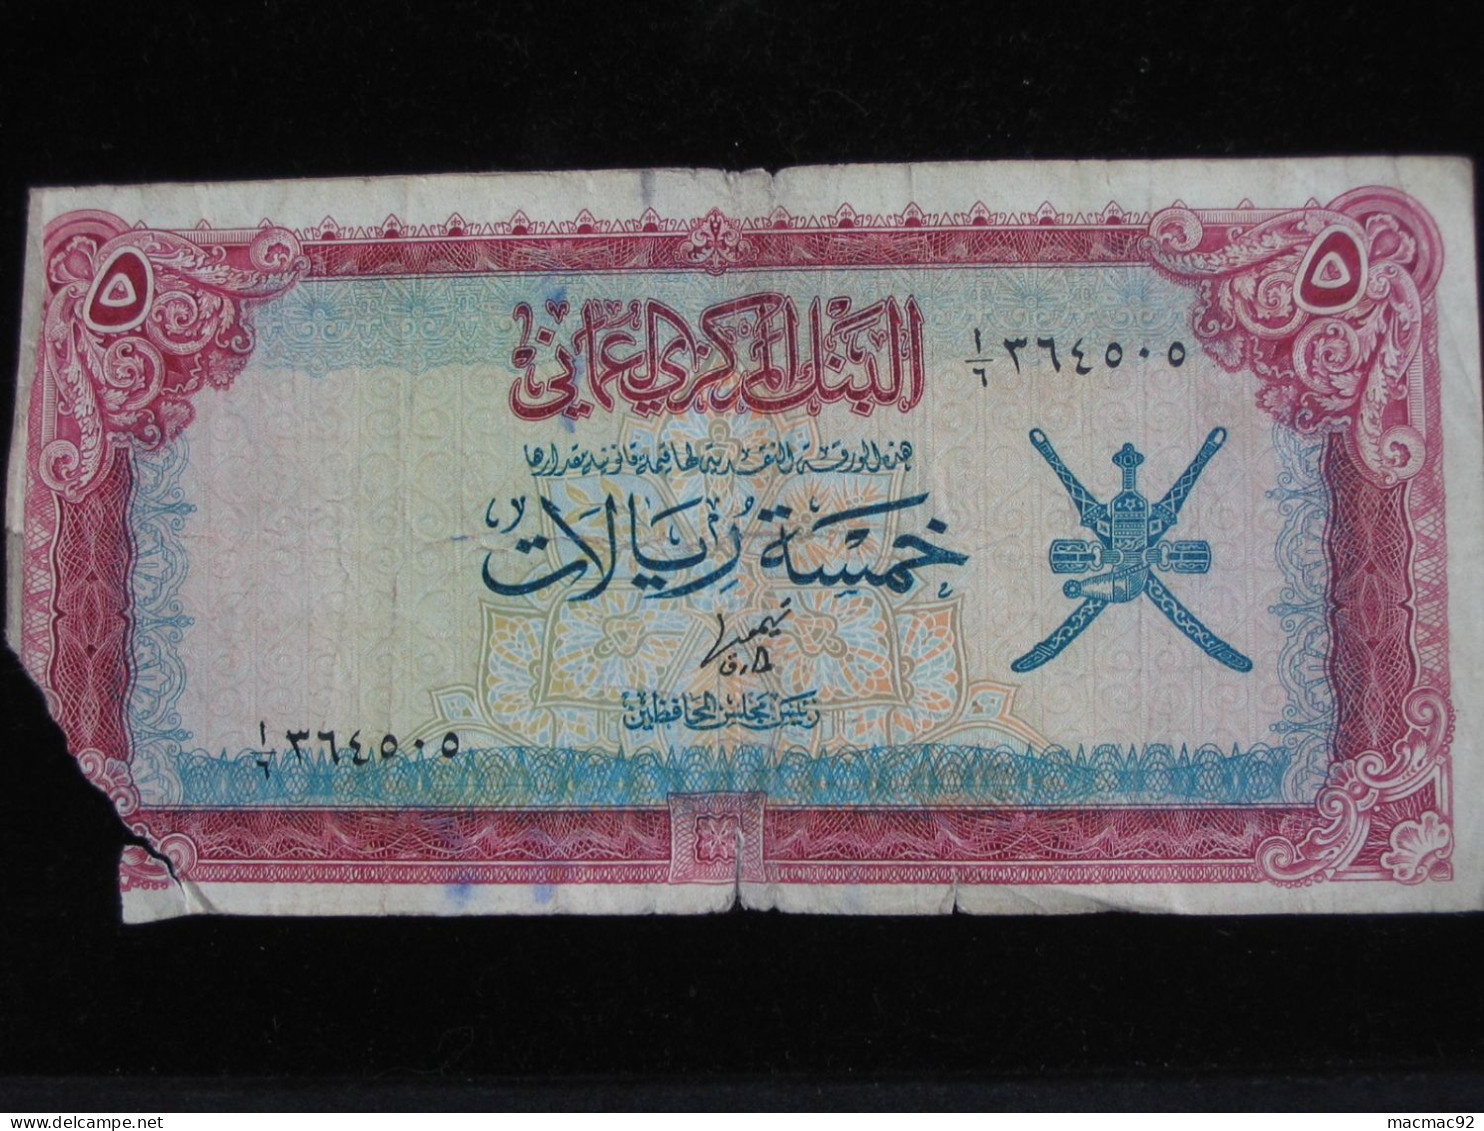 5 Five Rial 1977 ? -  Central Bank Of Oman  **** EN ACHAT IMMEDIAT **** - Oman